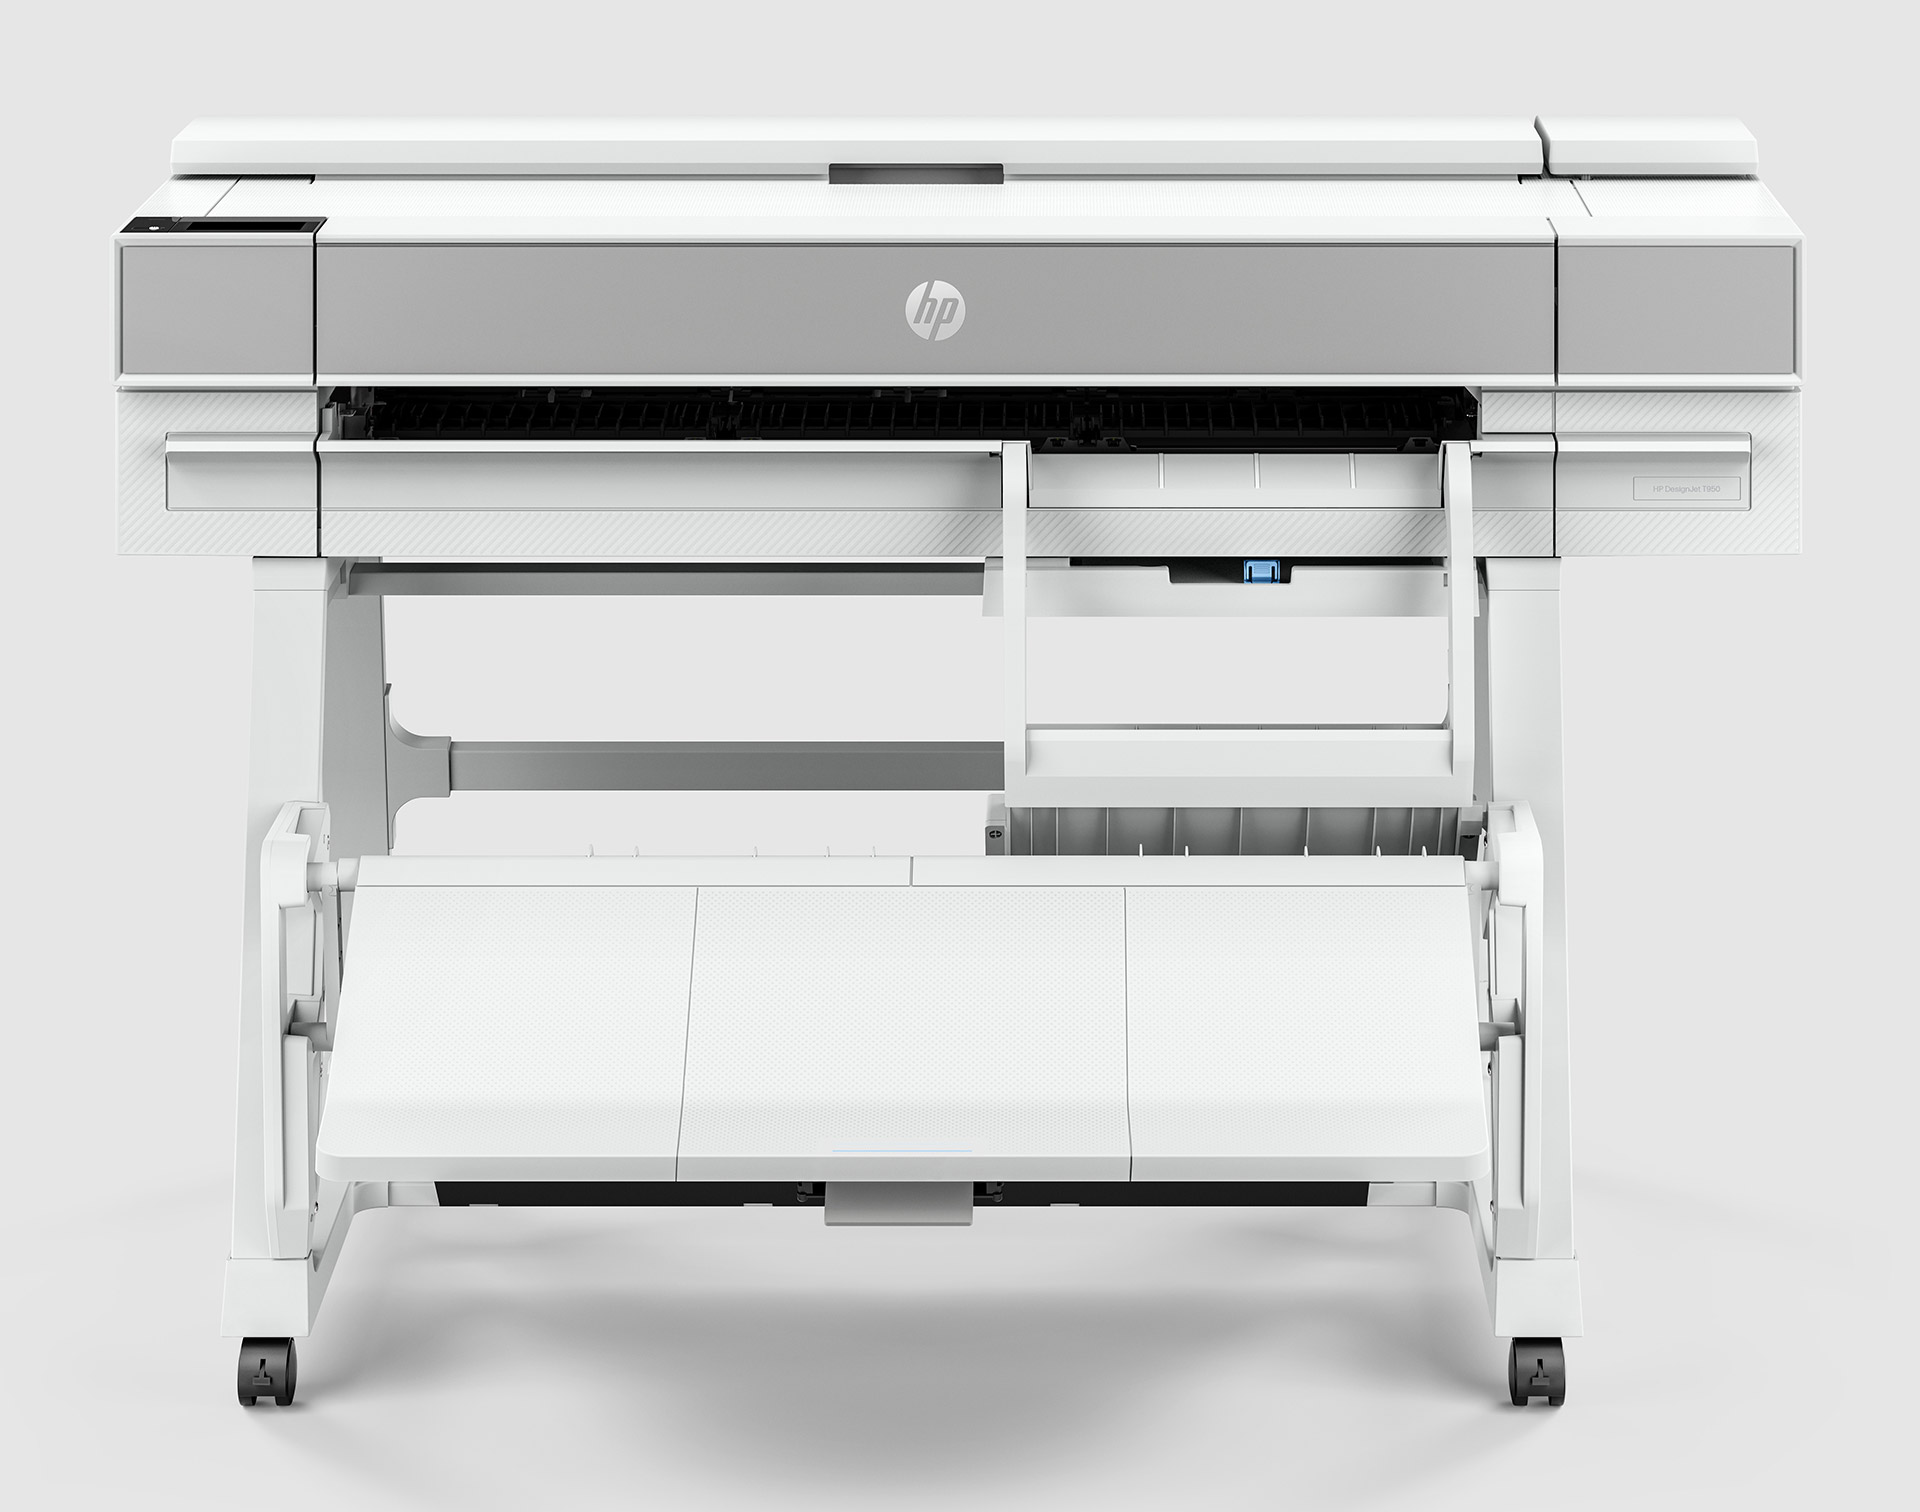 The HP DesignJet T950